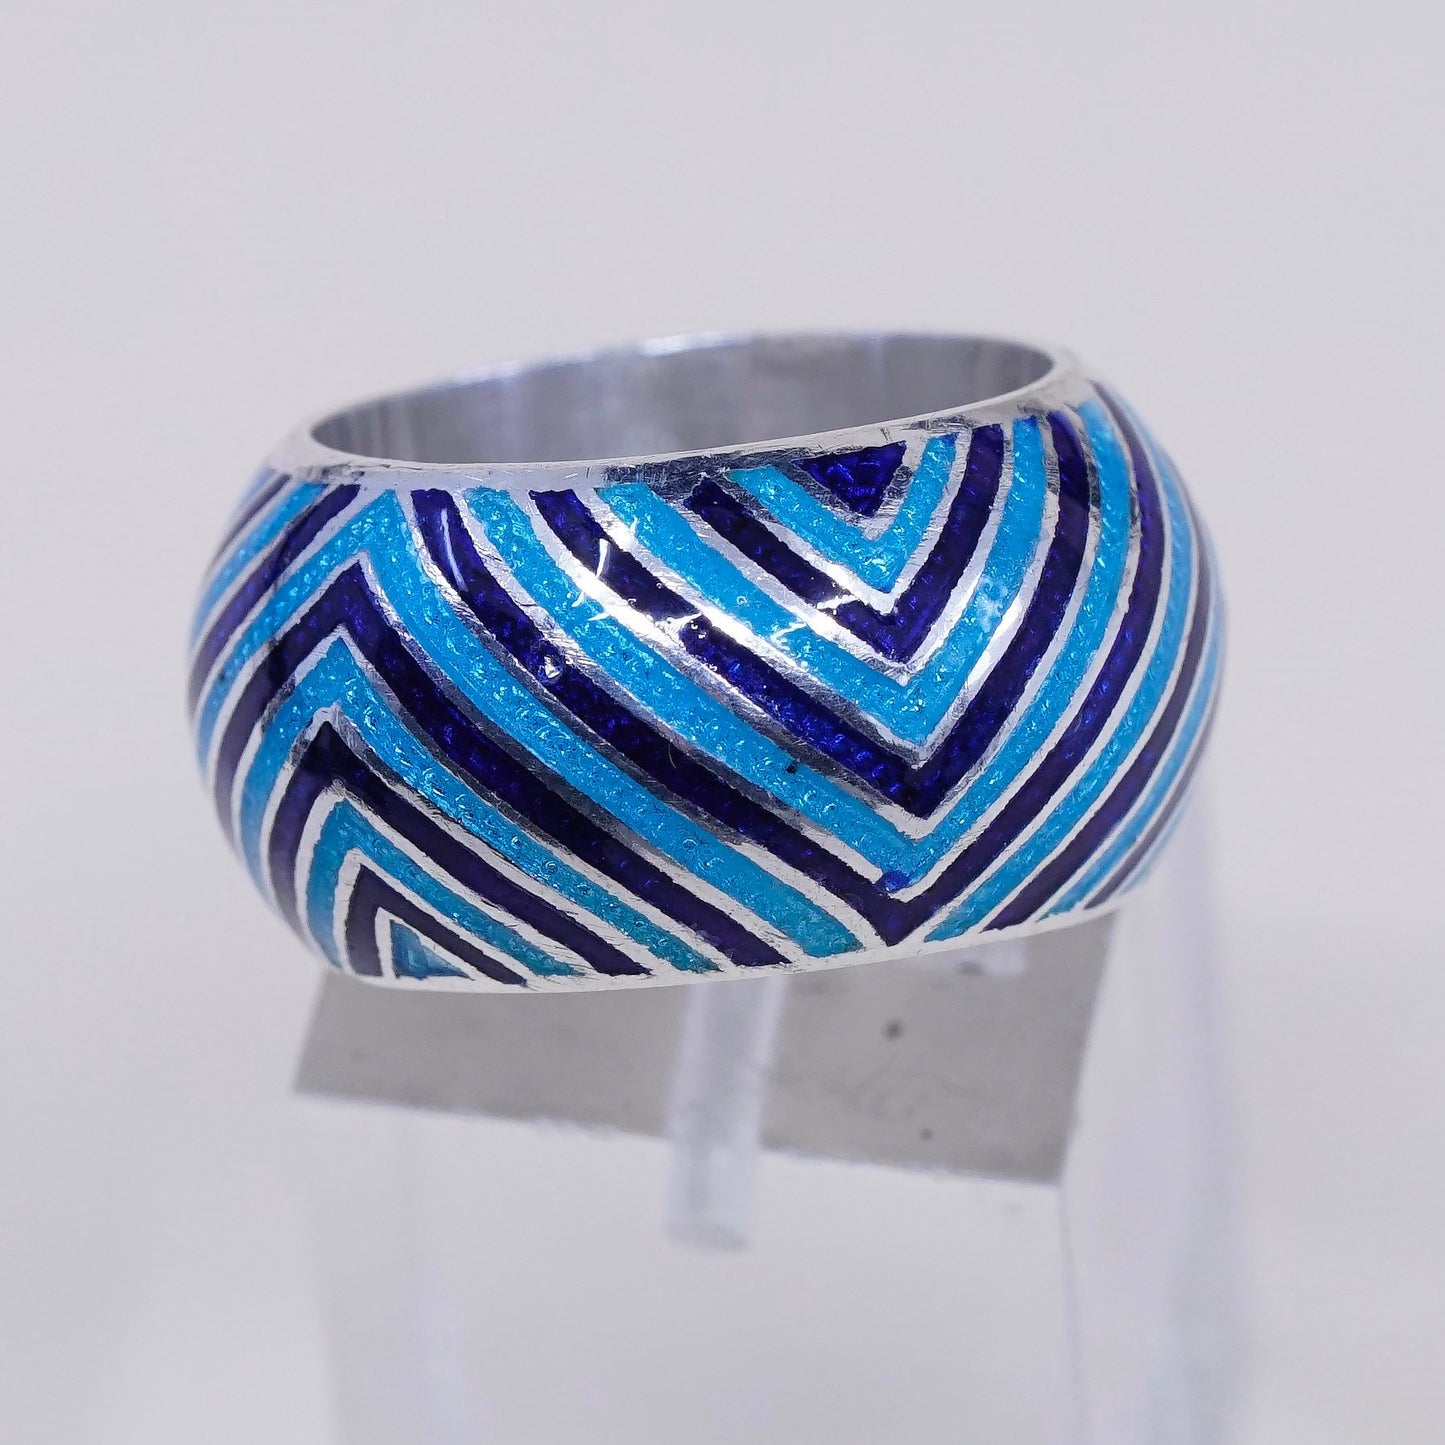 Size 6, vintage Sterling silver handmade ring, 925 band w/ blue enamel Zuni